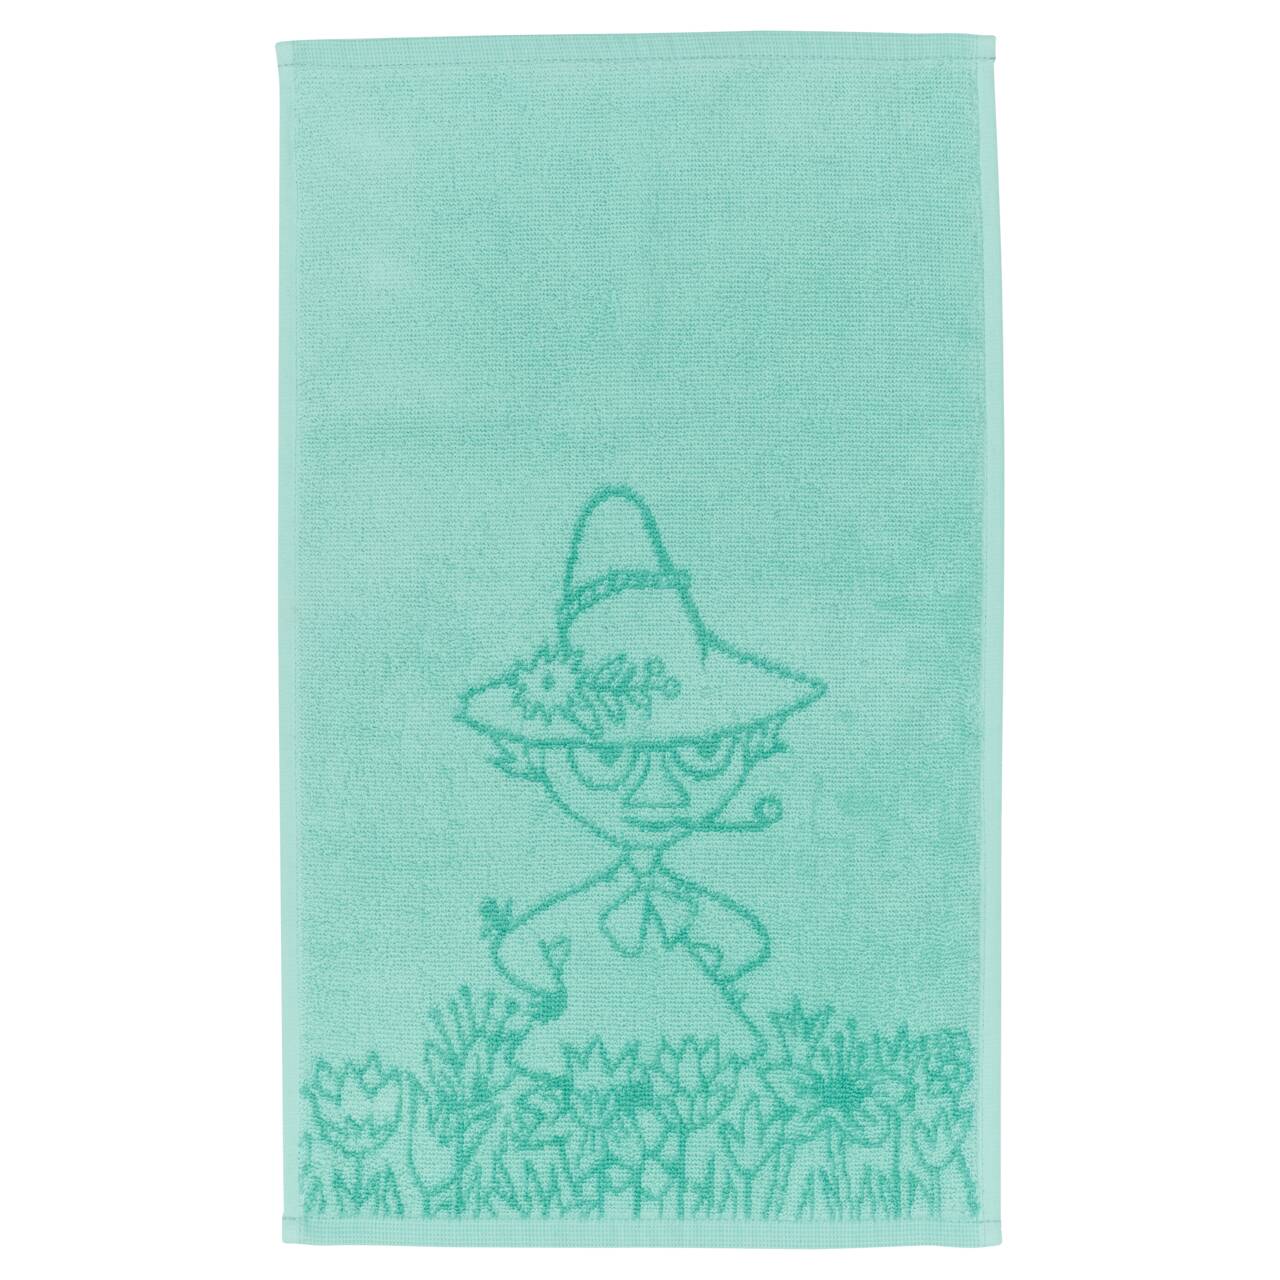 1070907_Moomin_moomin-hand-towel-30x50cm-snufkin_mint_01.jpg